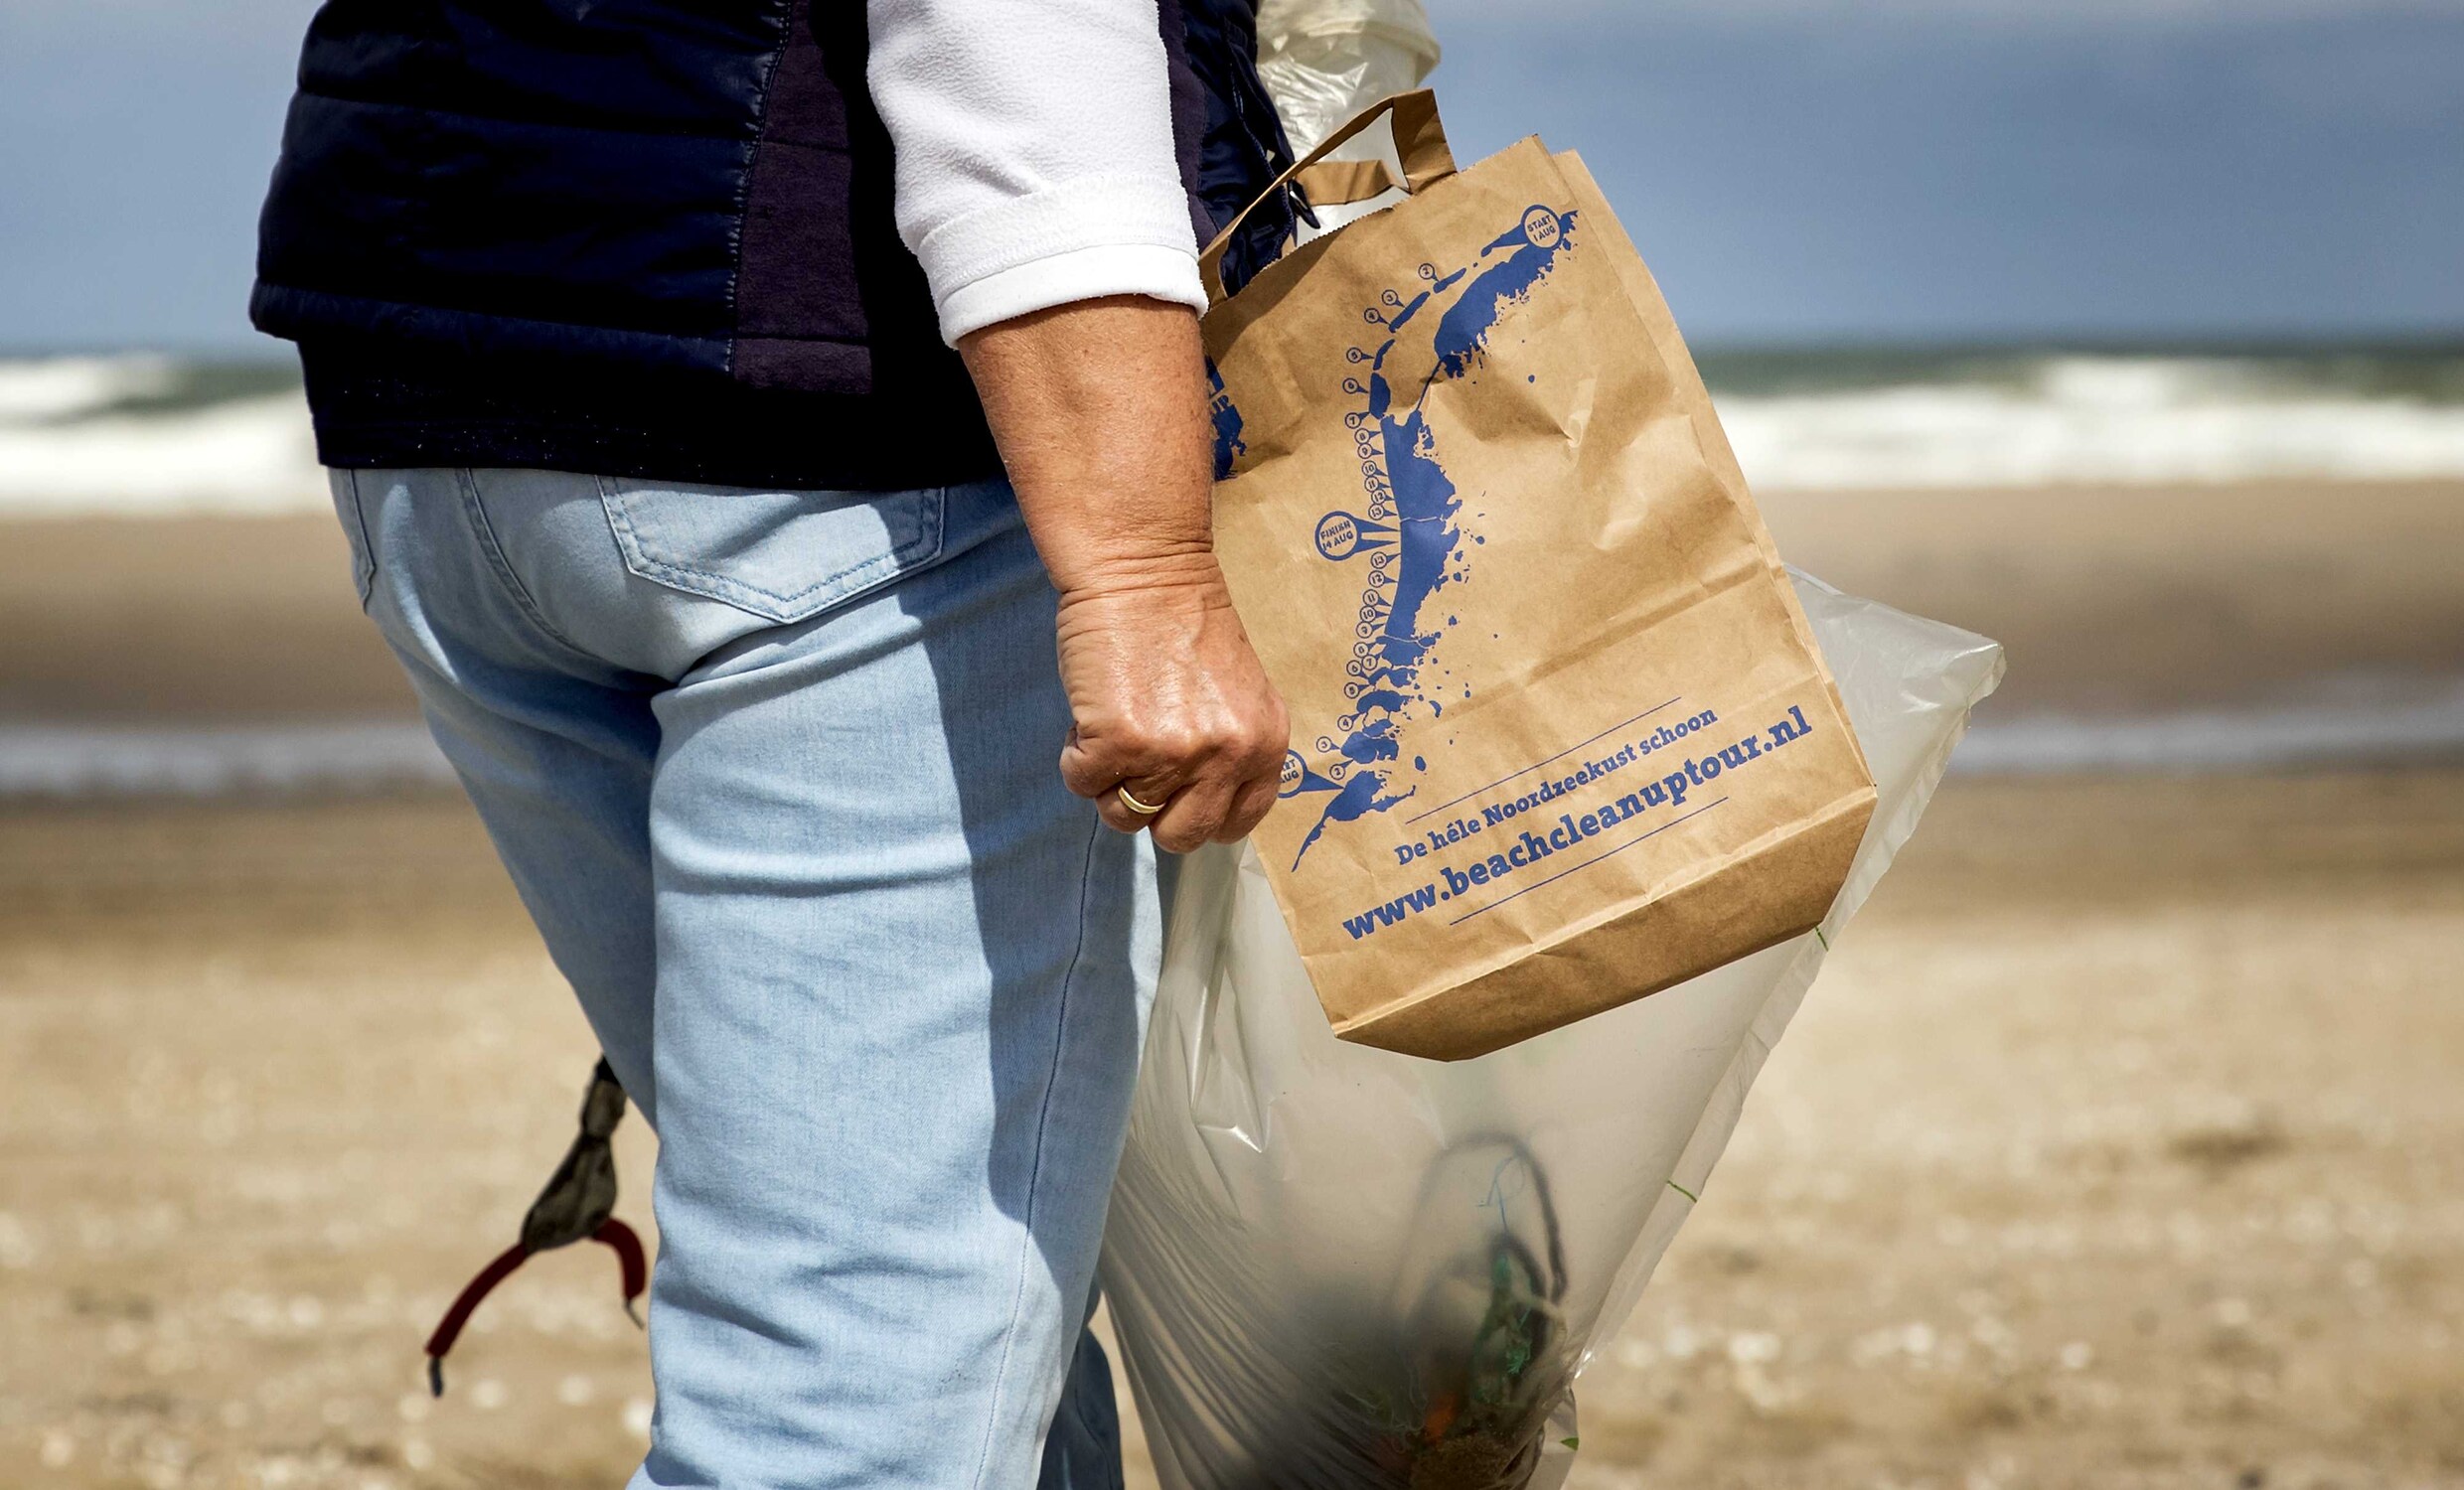 Koeienhuid, bh en 19.000 kilo ander afval geruimd op Nederlandse stranden